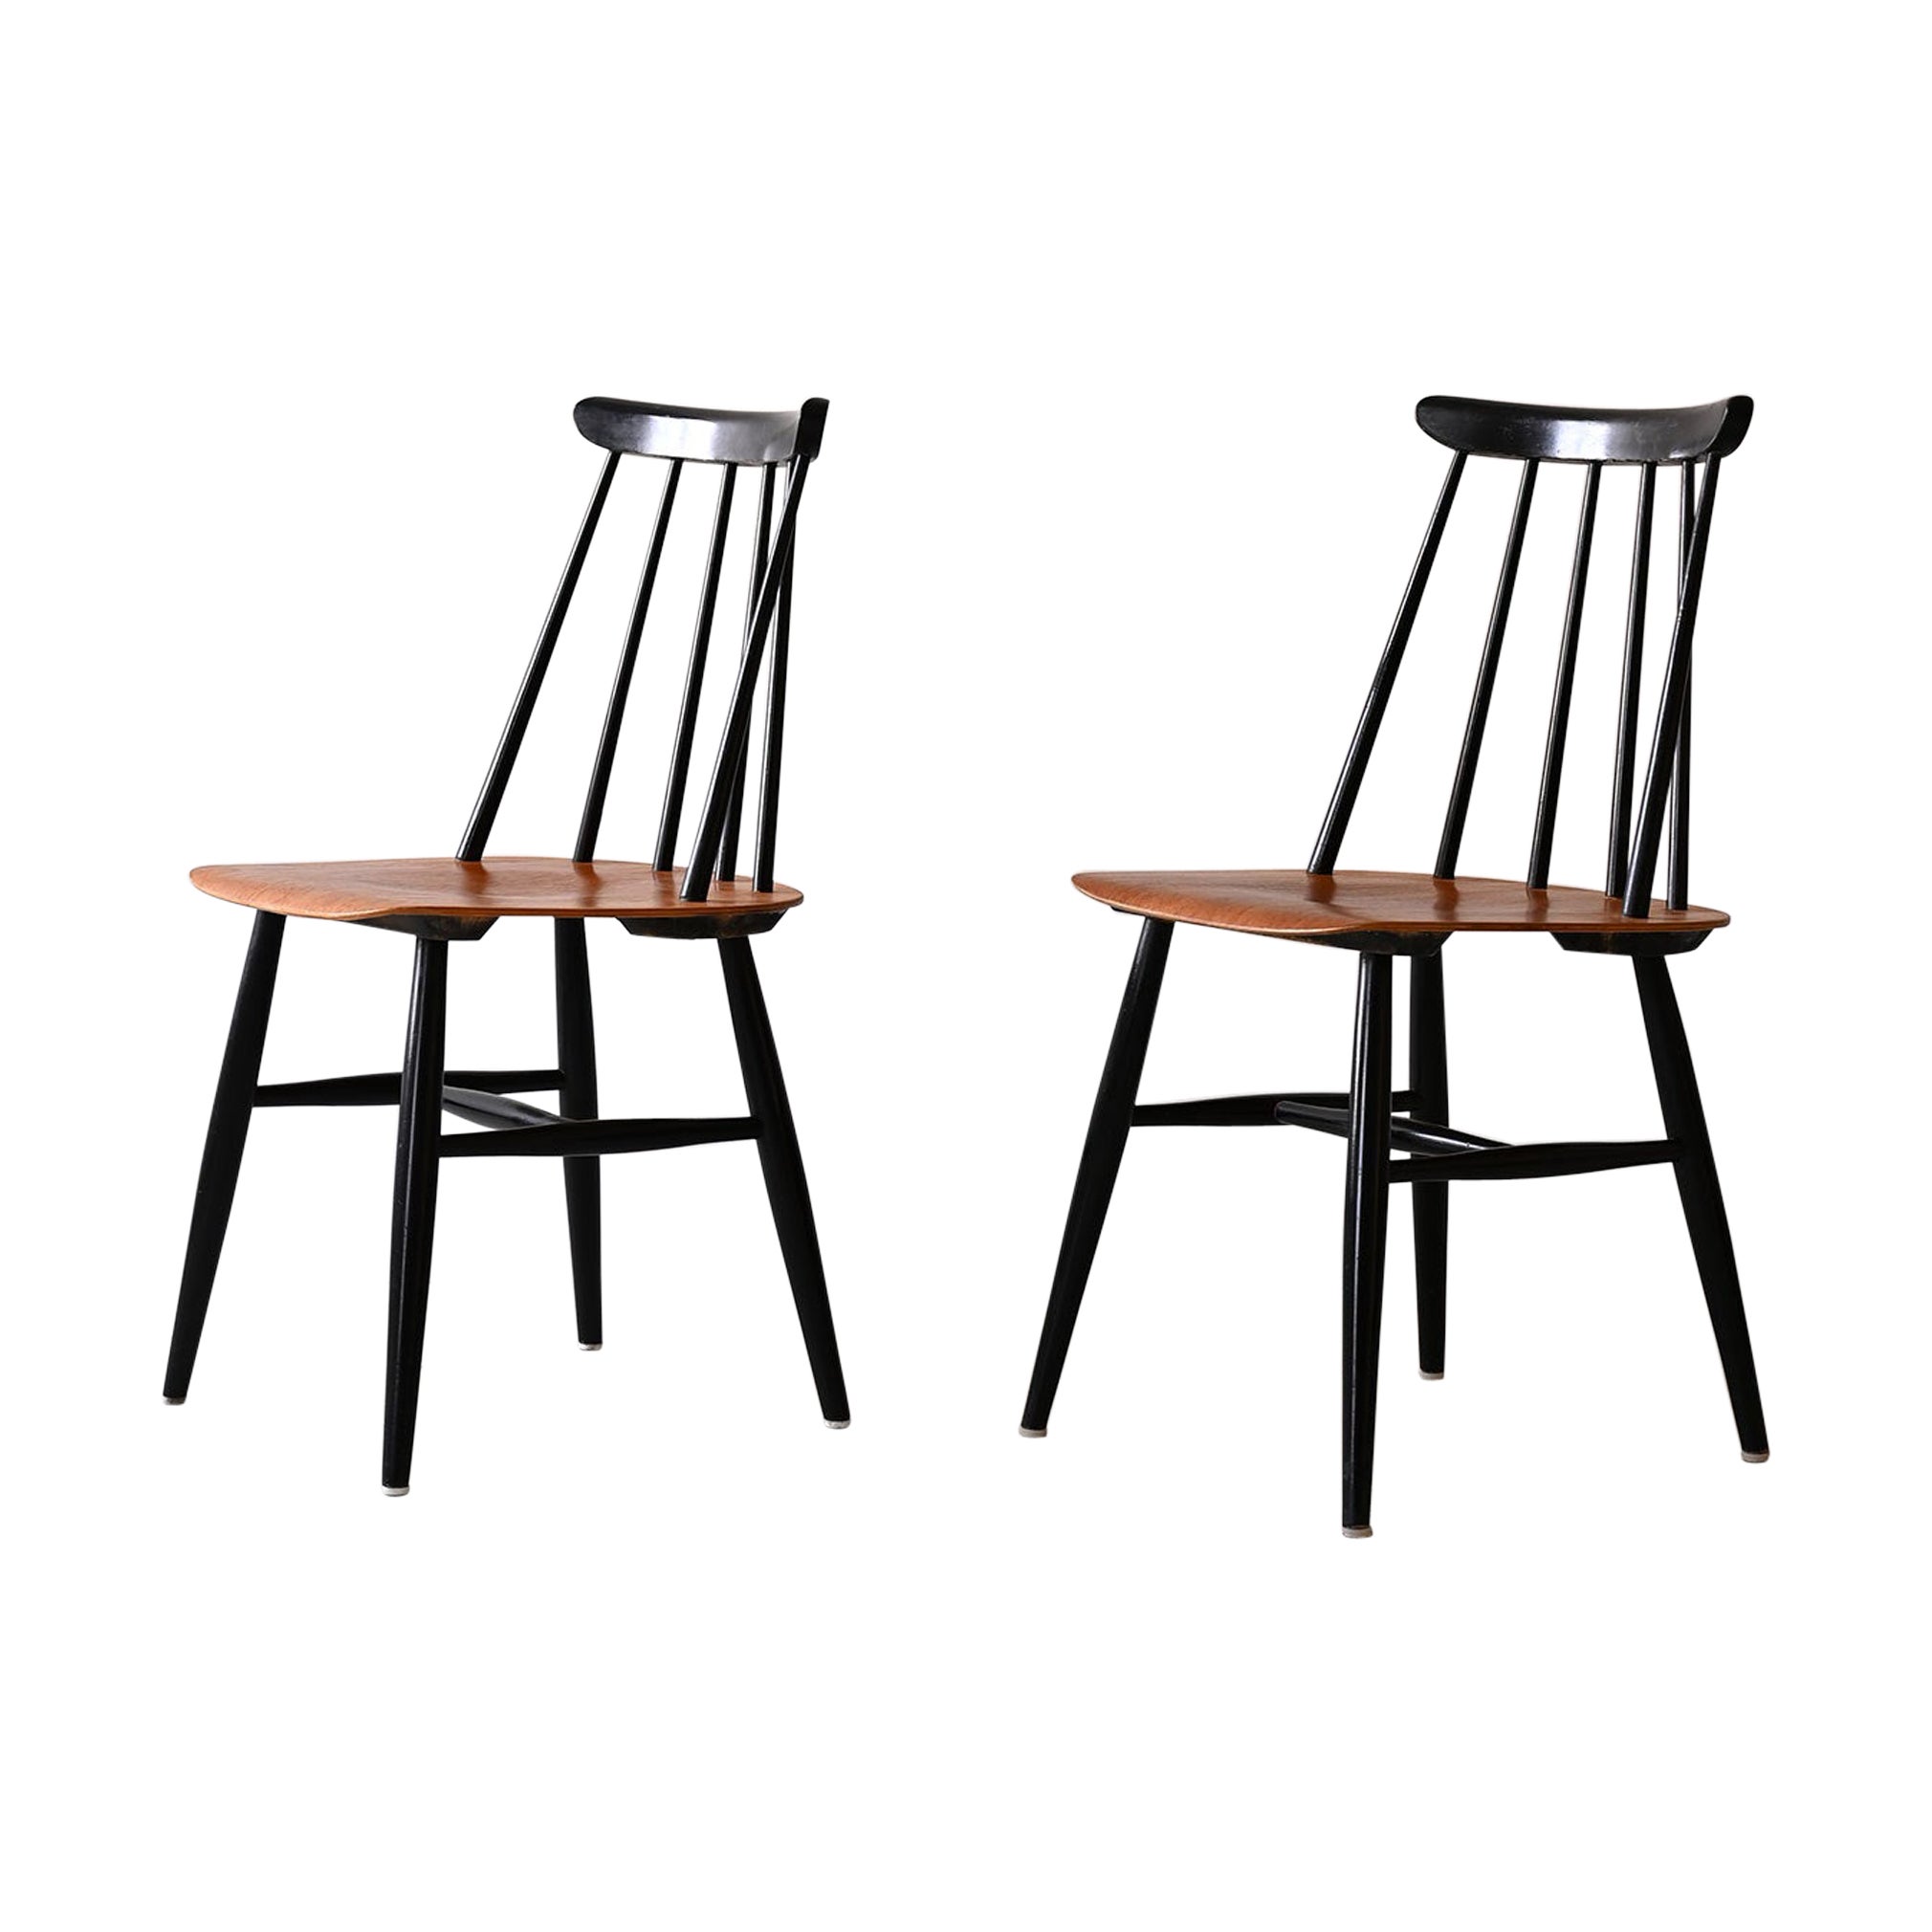 Pair of chairs designed by Ilmari Tapiovaaraa model 'Fanett'